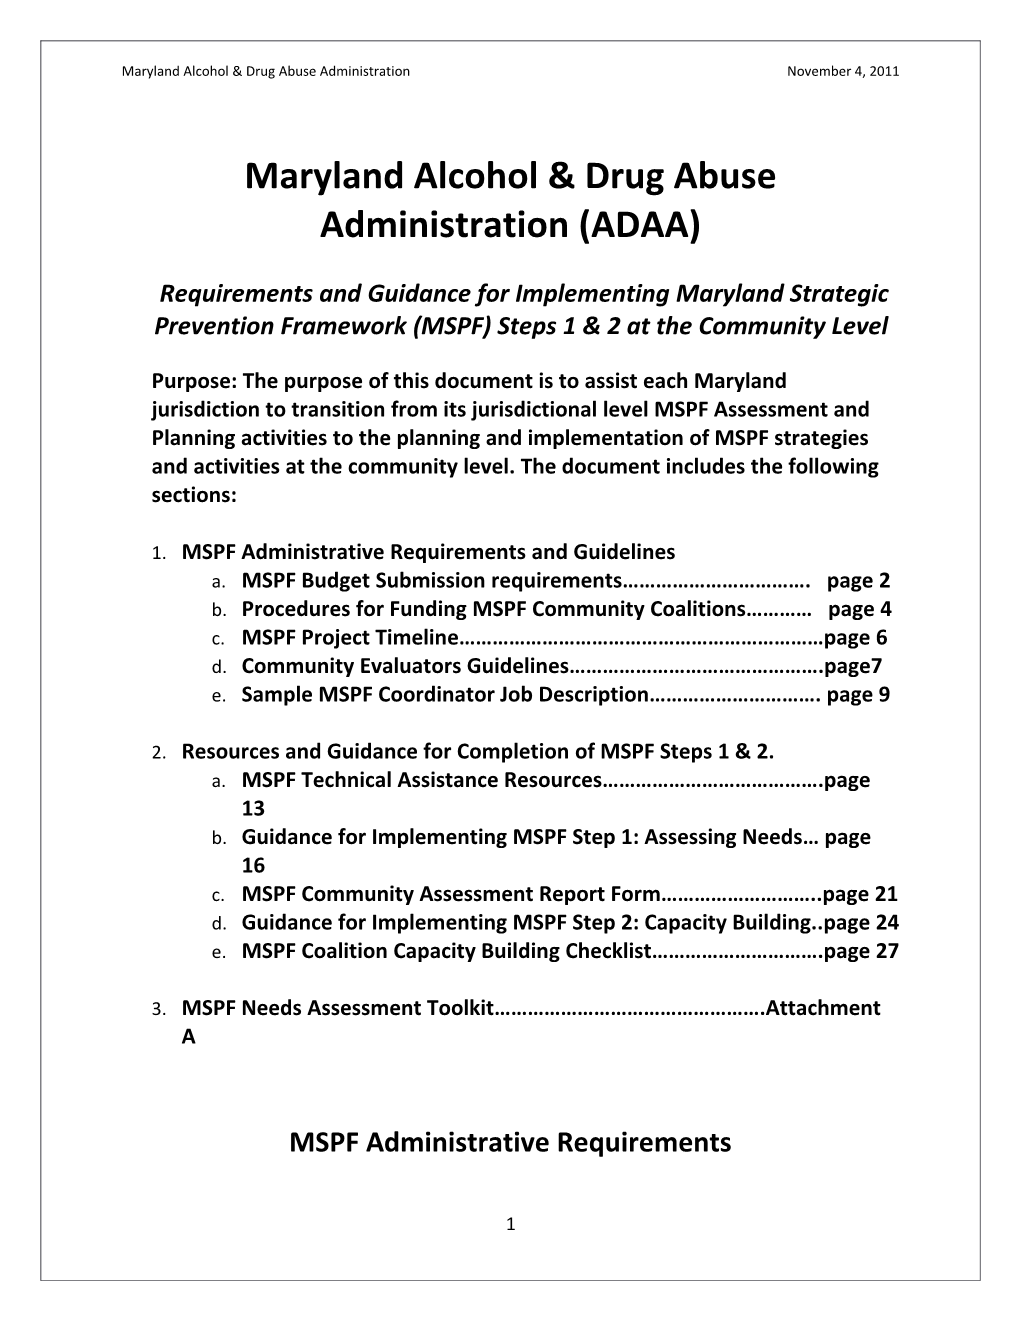 Maryland Alcohol & Drug Abuse Administration (ADAA)